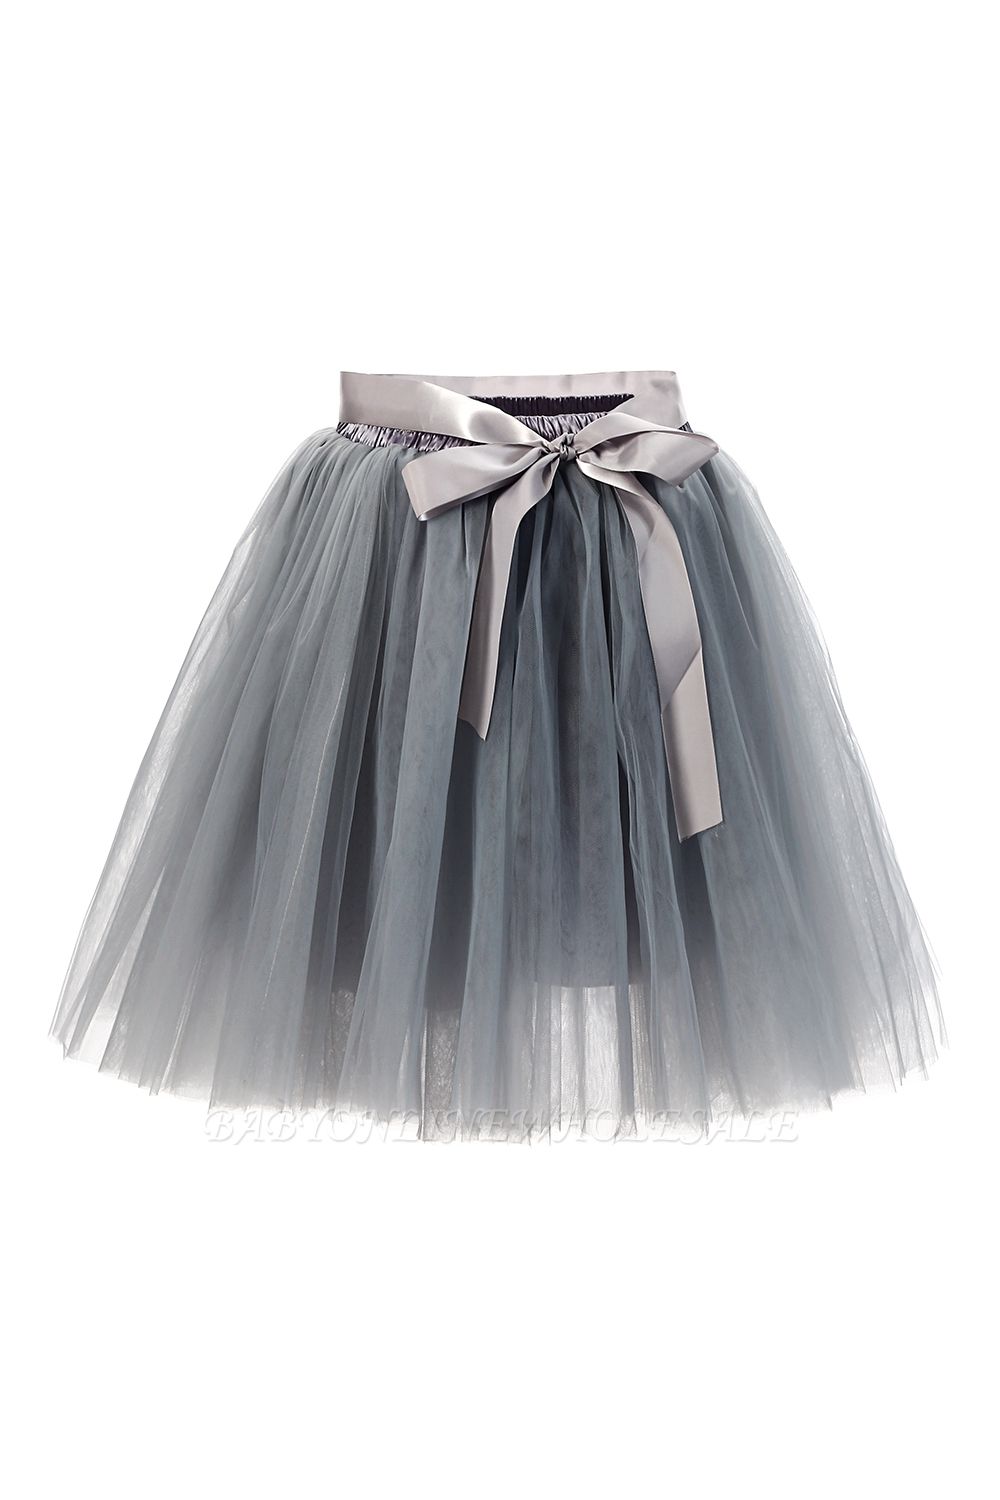 Amazing Tulle Short Mini Ball-Gown Skirts | Elastic Women's Skirts